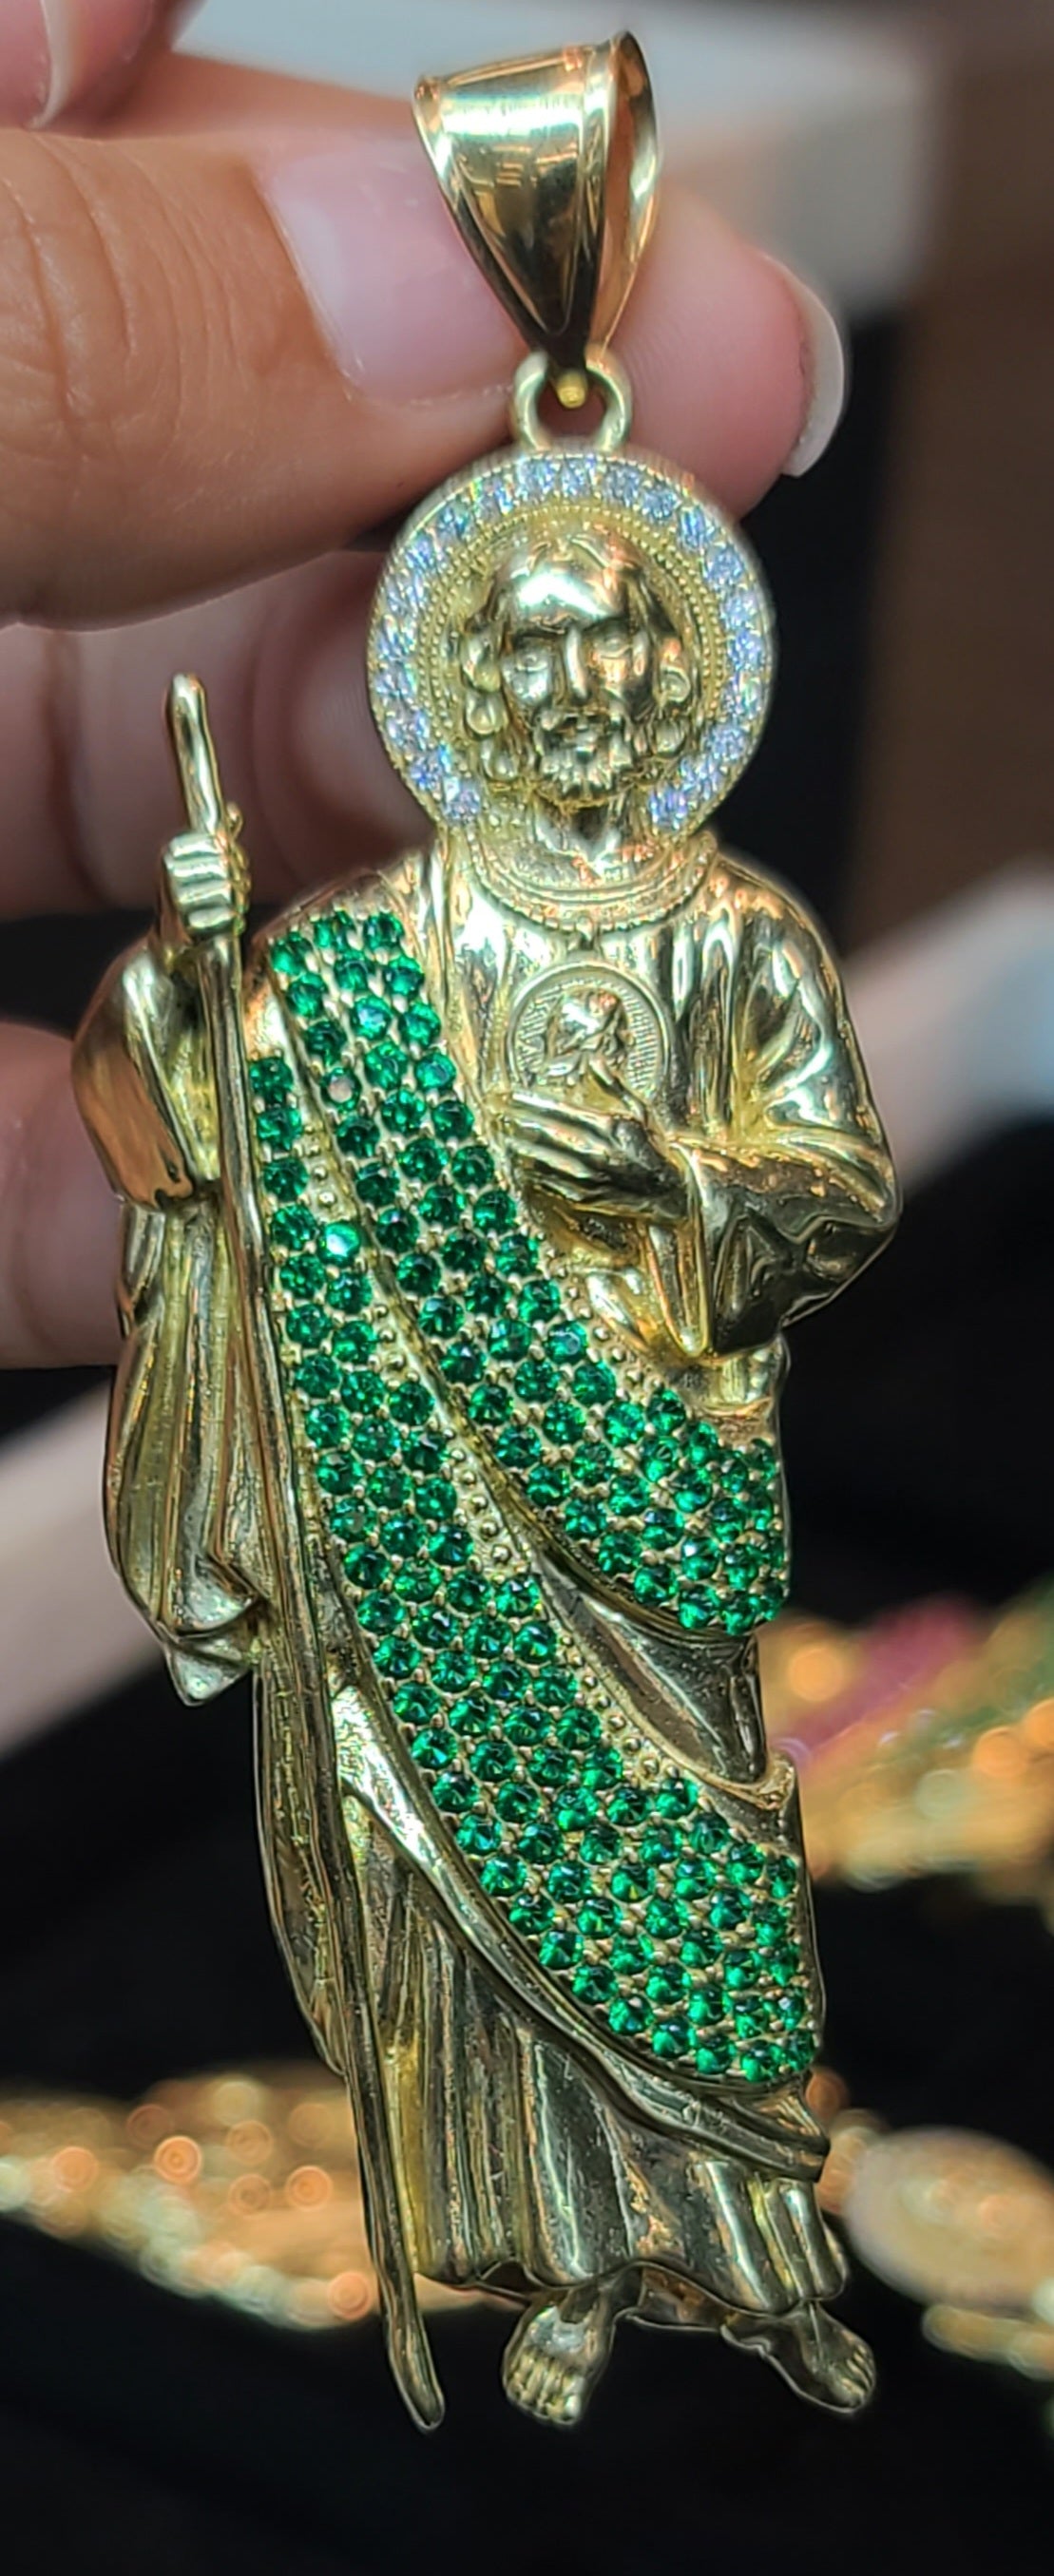 Yellow Gold St. Judas Pendant with Green CZs